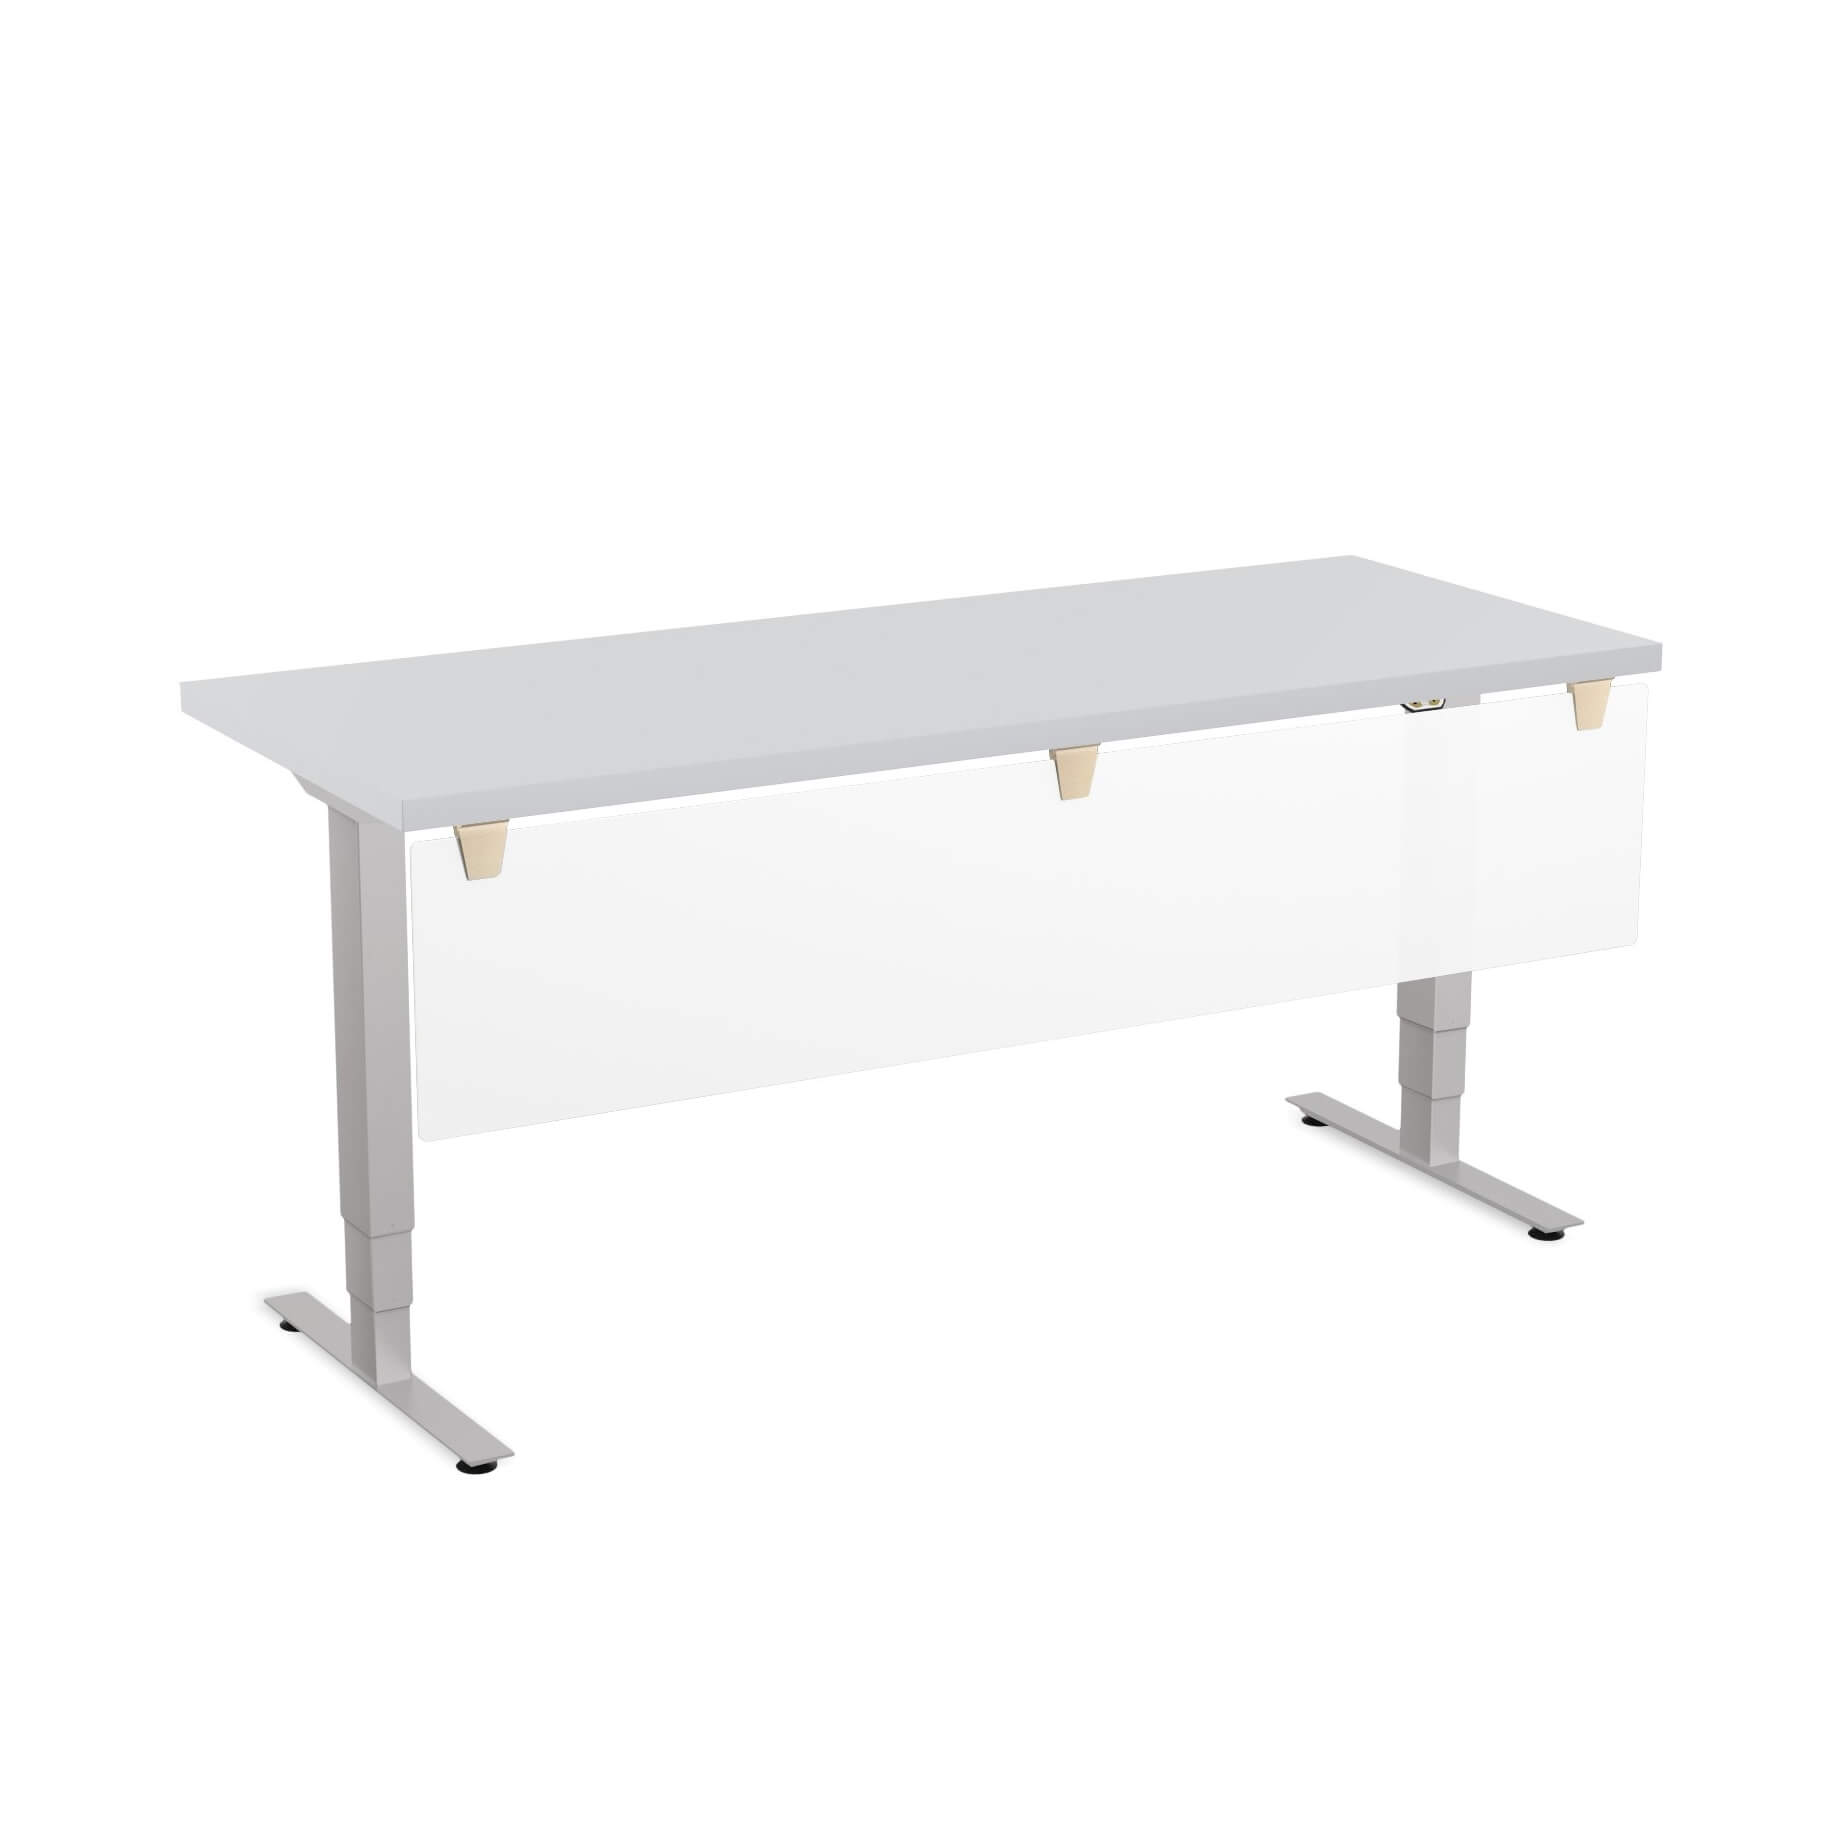 sit-stand-desk-height-adjustable-work-table-1-2-3-4.jpg